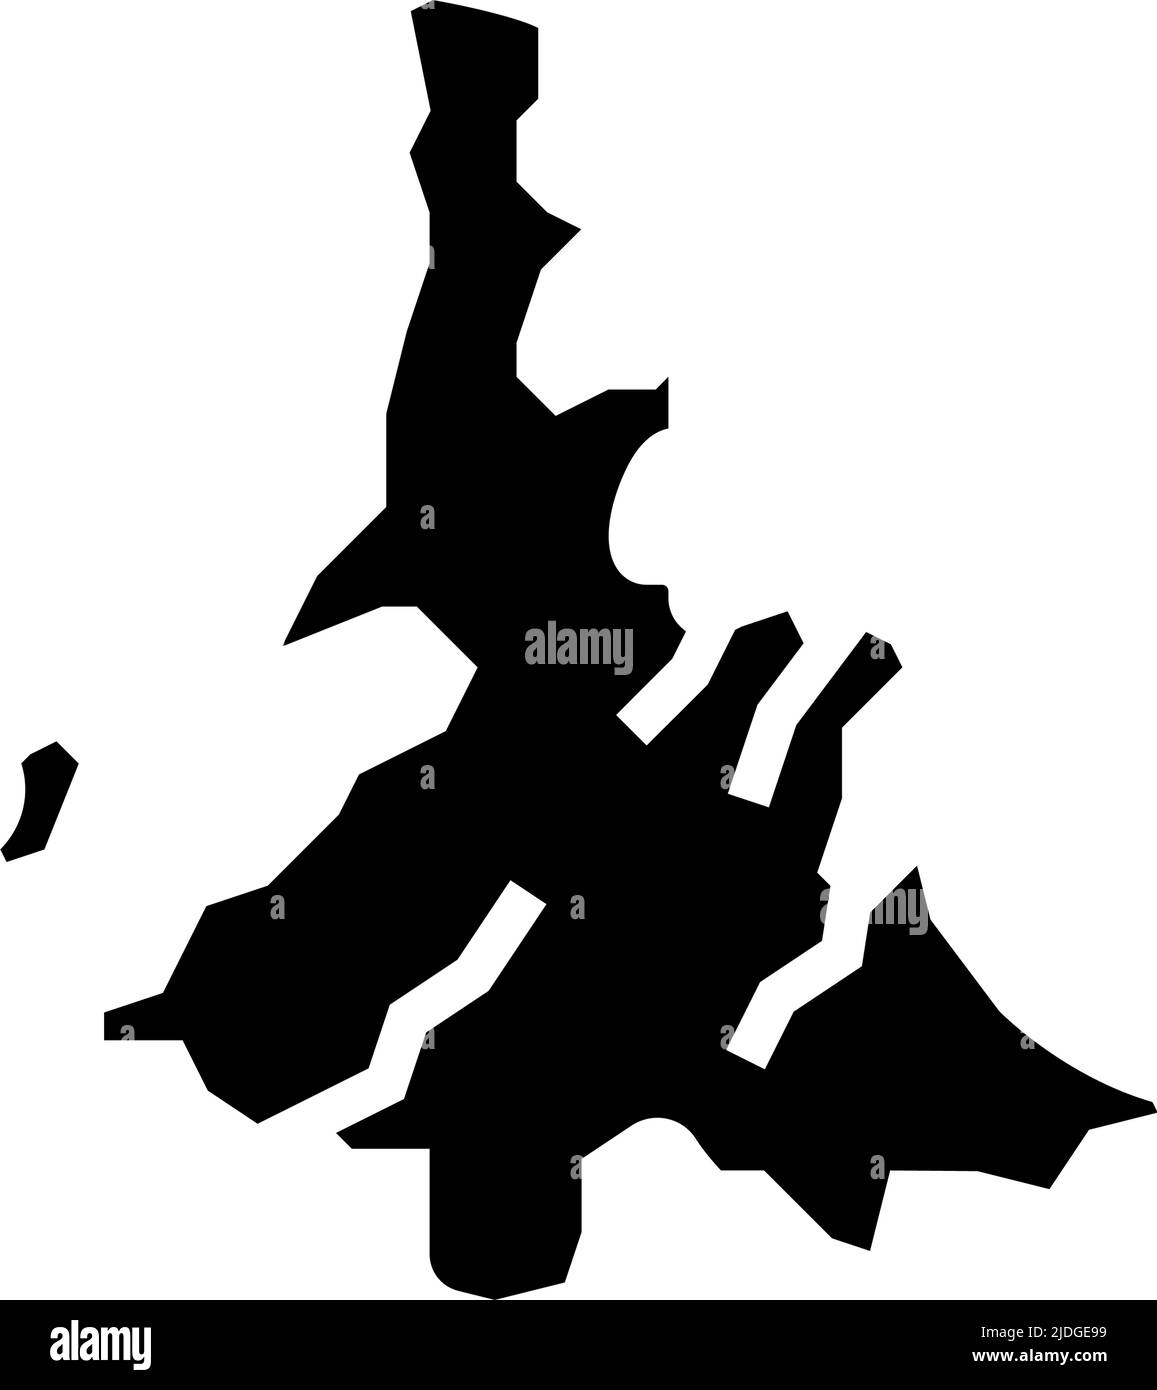 Abbildung des Symbols für Island whitsunday Glyphen Stock Vektor